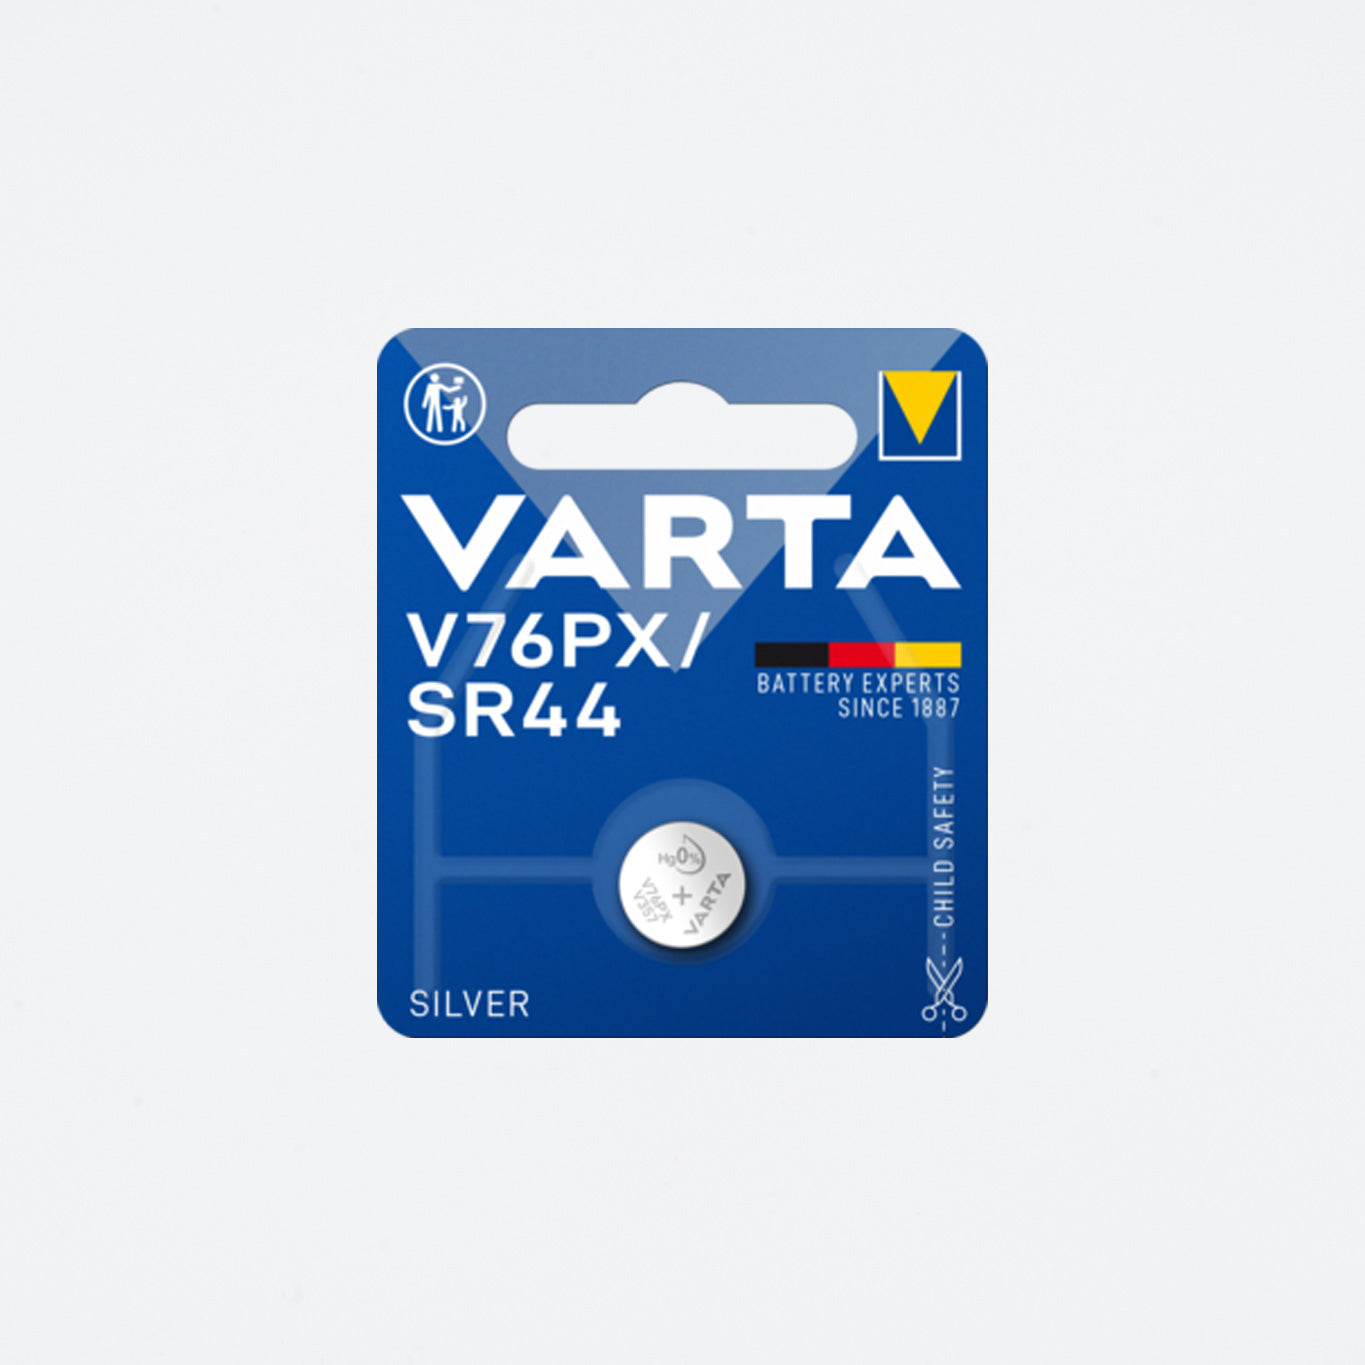 Varta V76PX/SR44